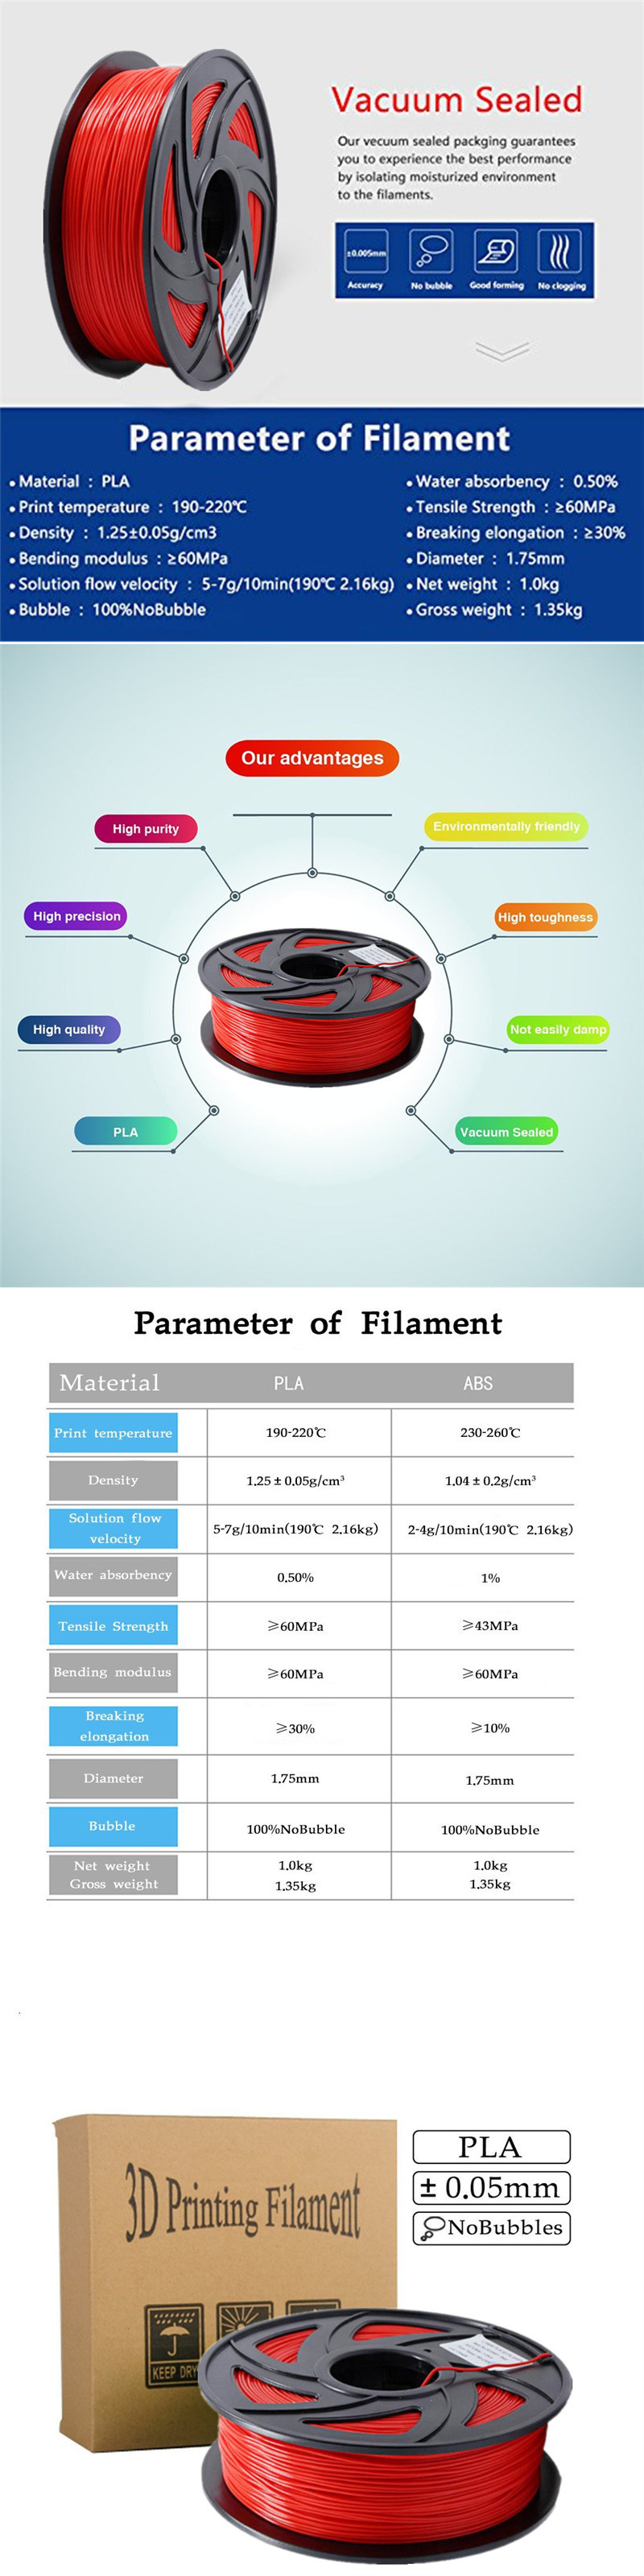 3D Printing Filament PLA 1.75mm Accuracy +/- 0.05mm 1kg Spool (2.2lbs), Skin